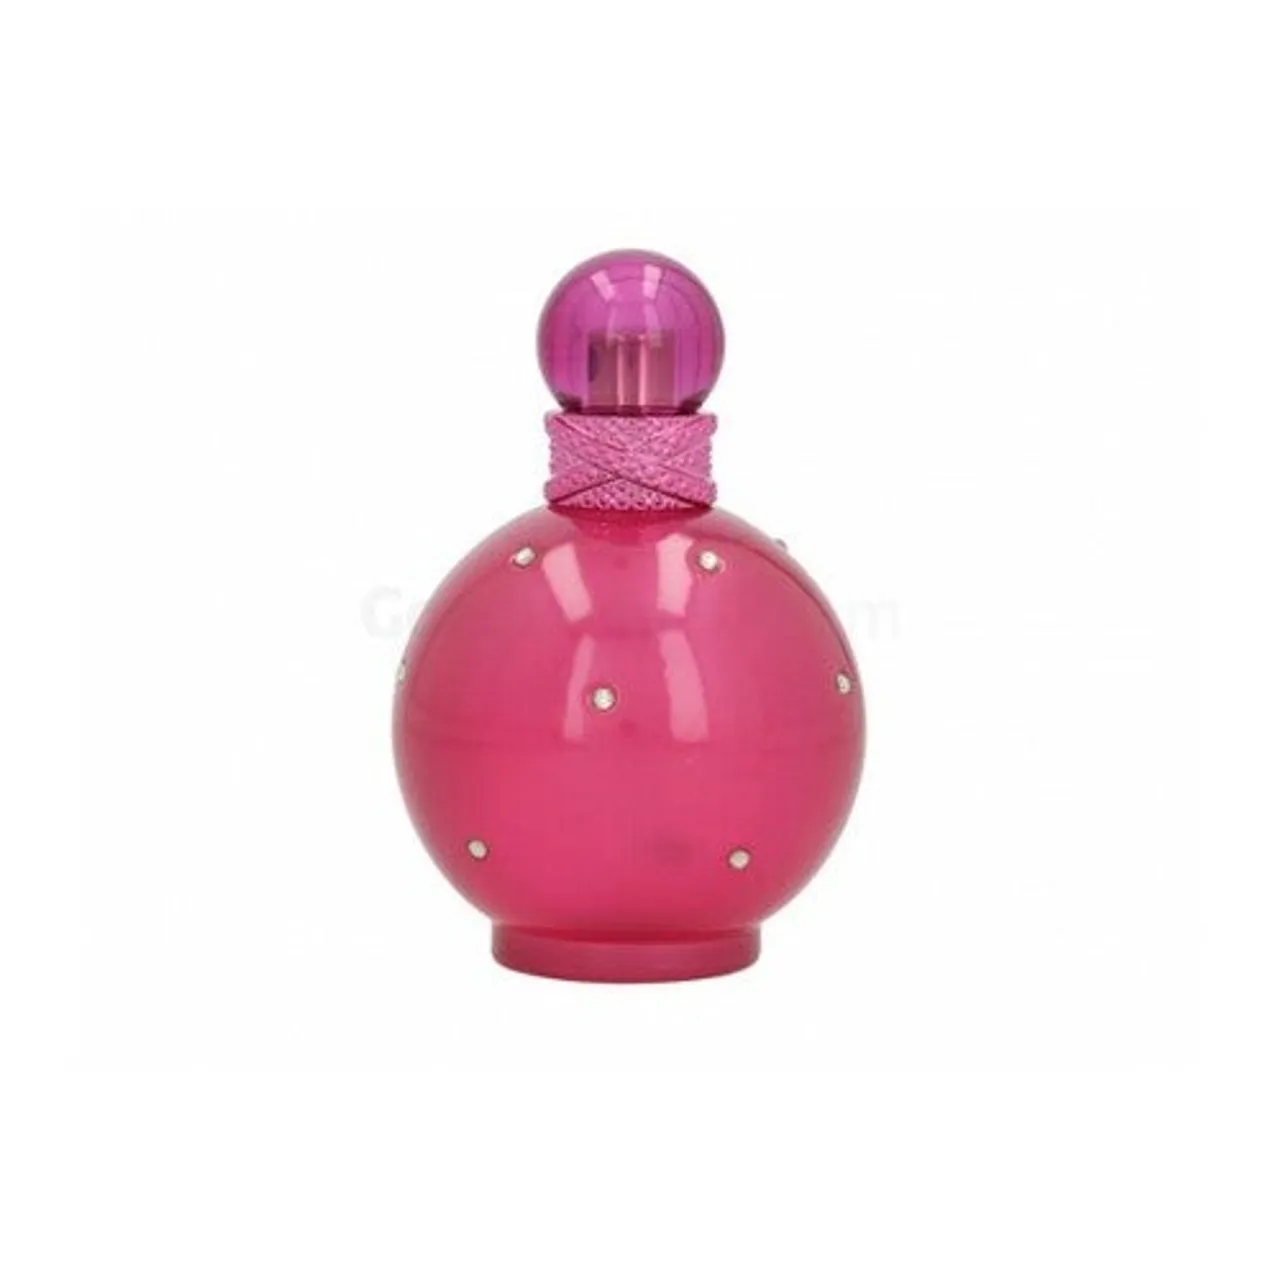 Britney Spears Fantasy Eau de Parfum 100 ml